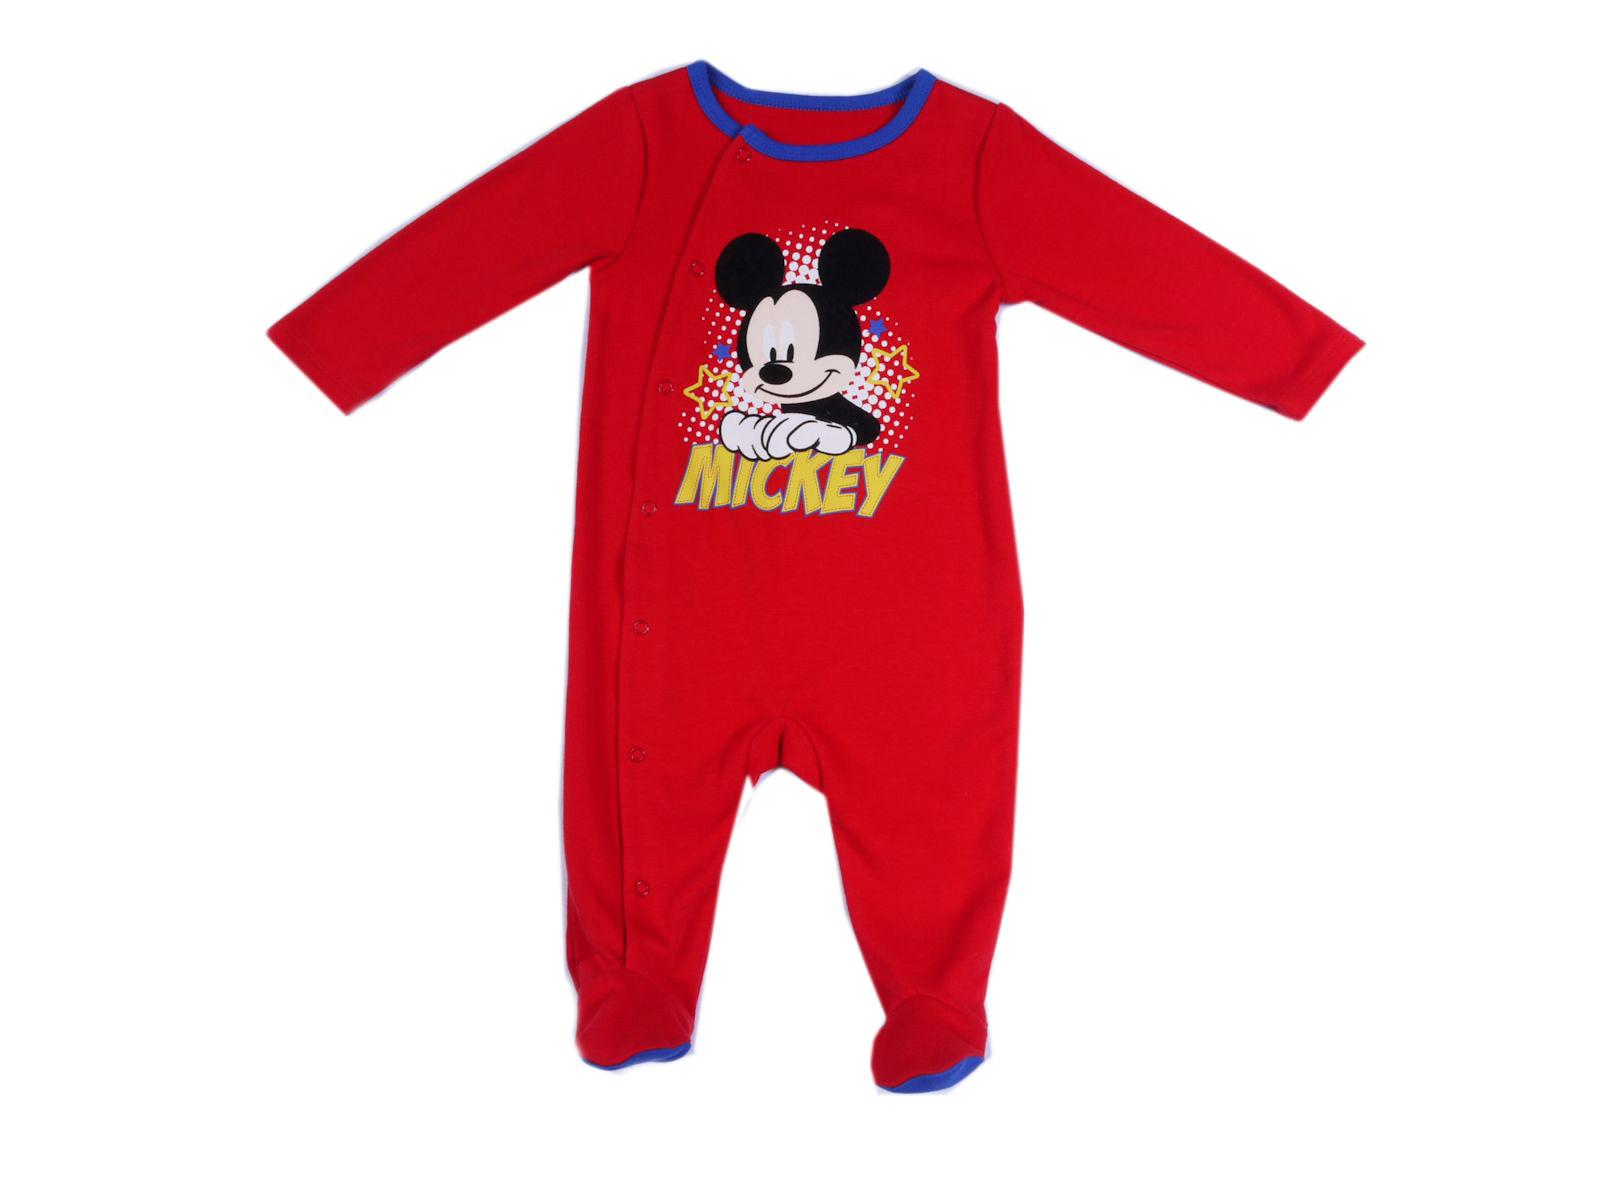 Disney Newborn & Infant Boy's Footed Sleeper Pajamas - Mickey Mouse